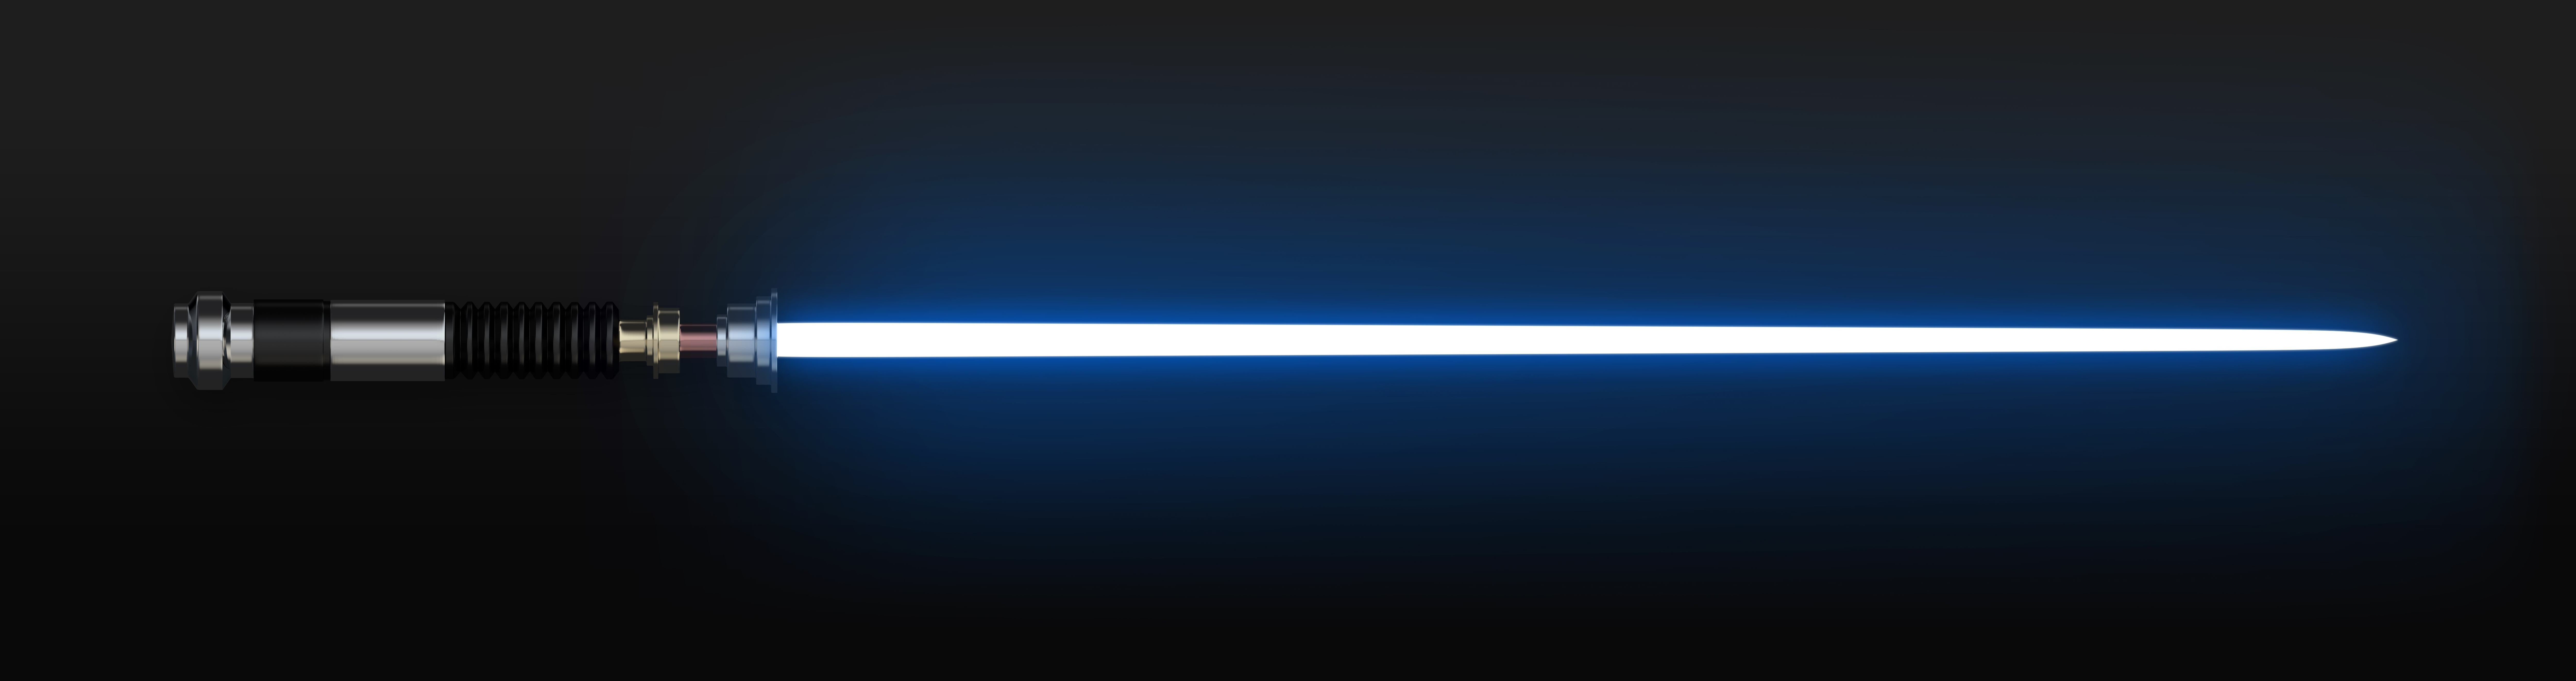 Star Wars Lightsaber Desktop Wallpaper